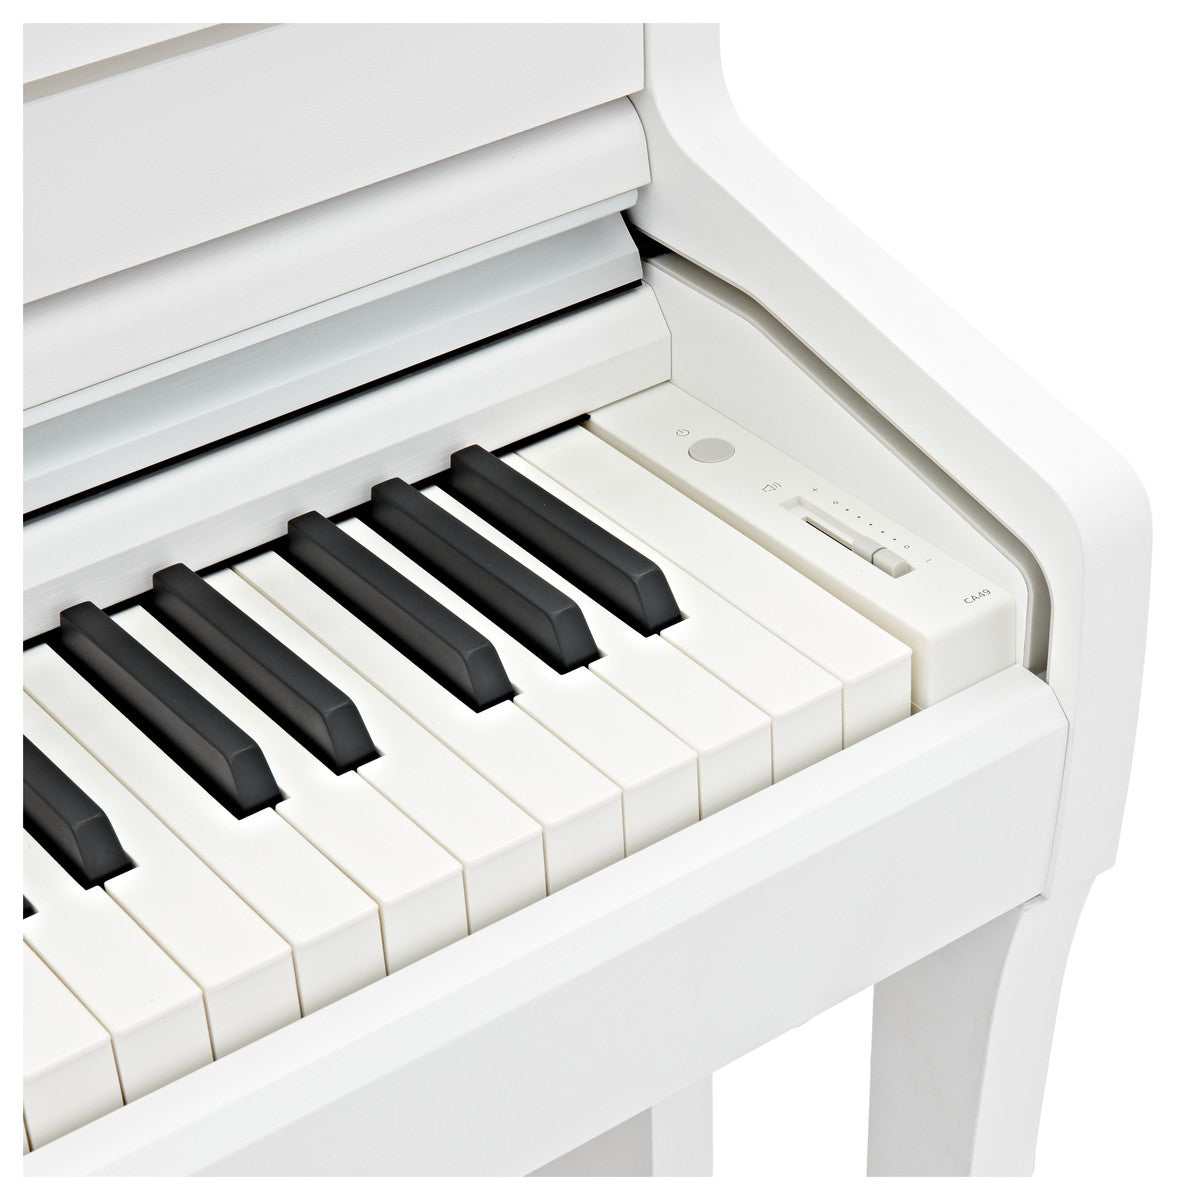 Pianos & Keyboards